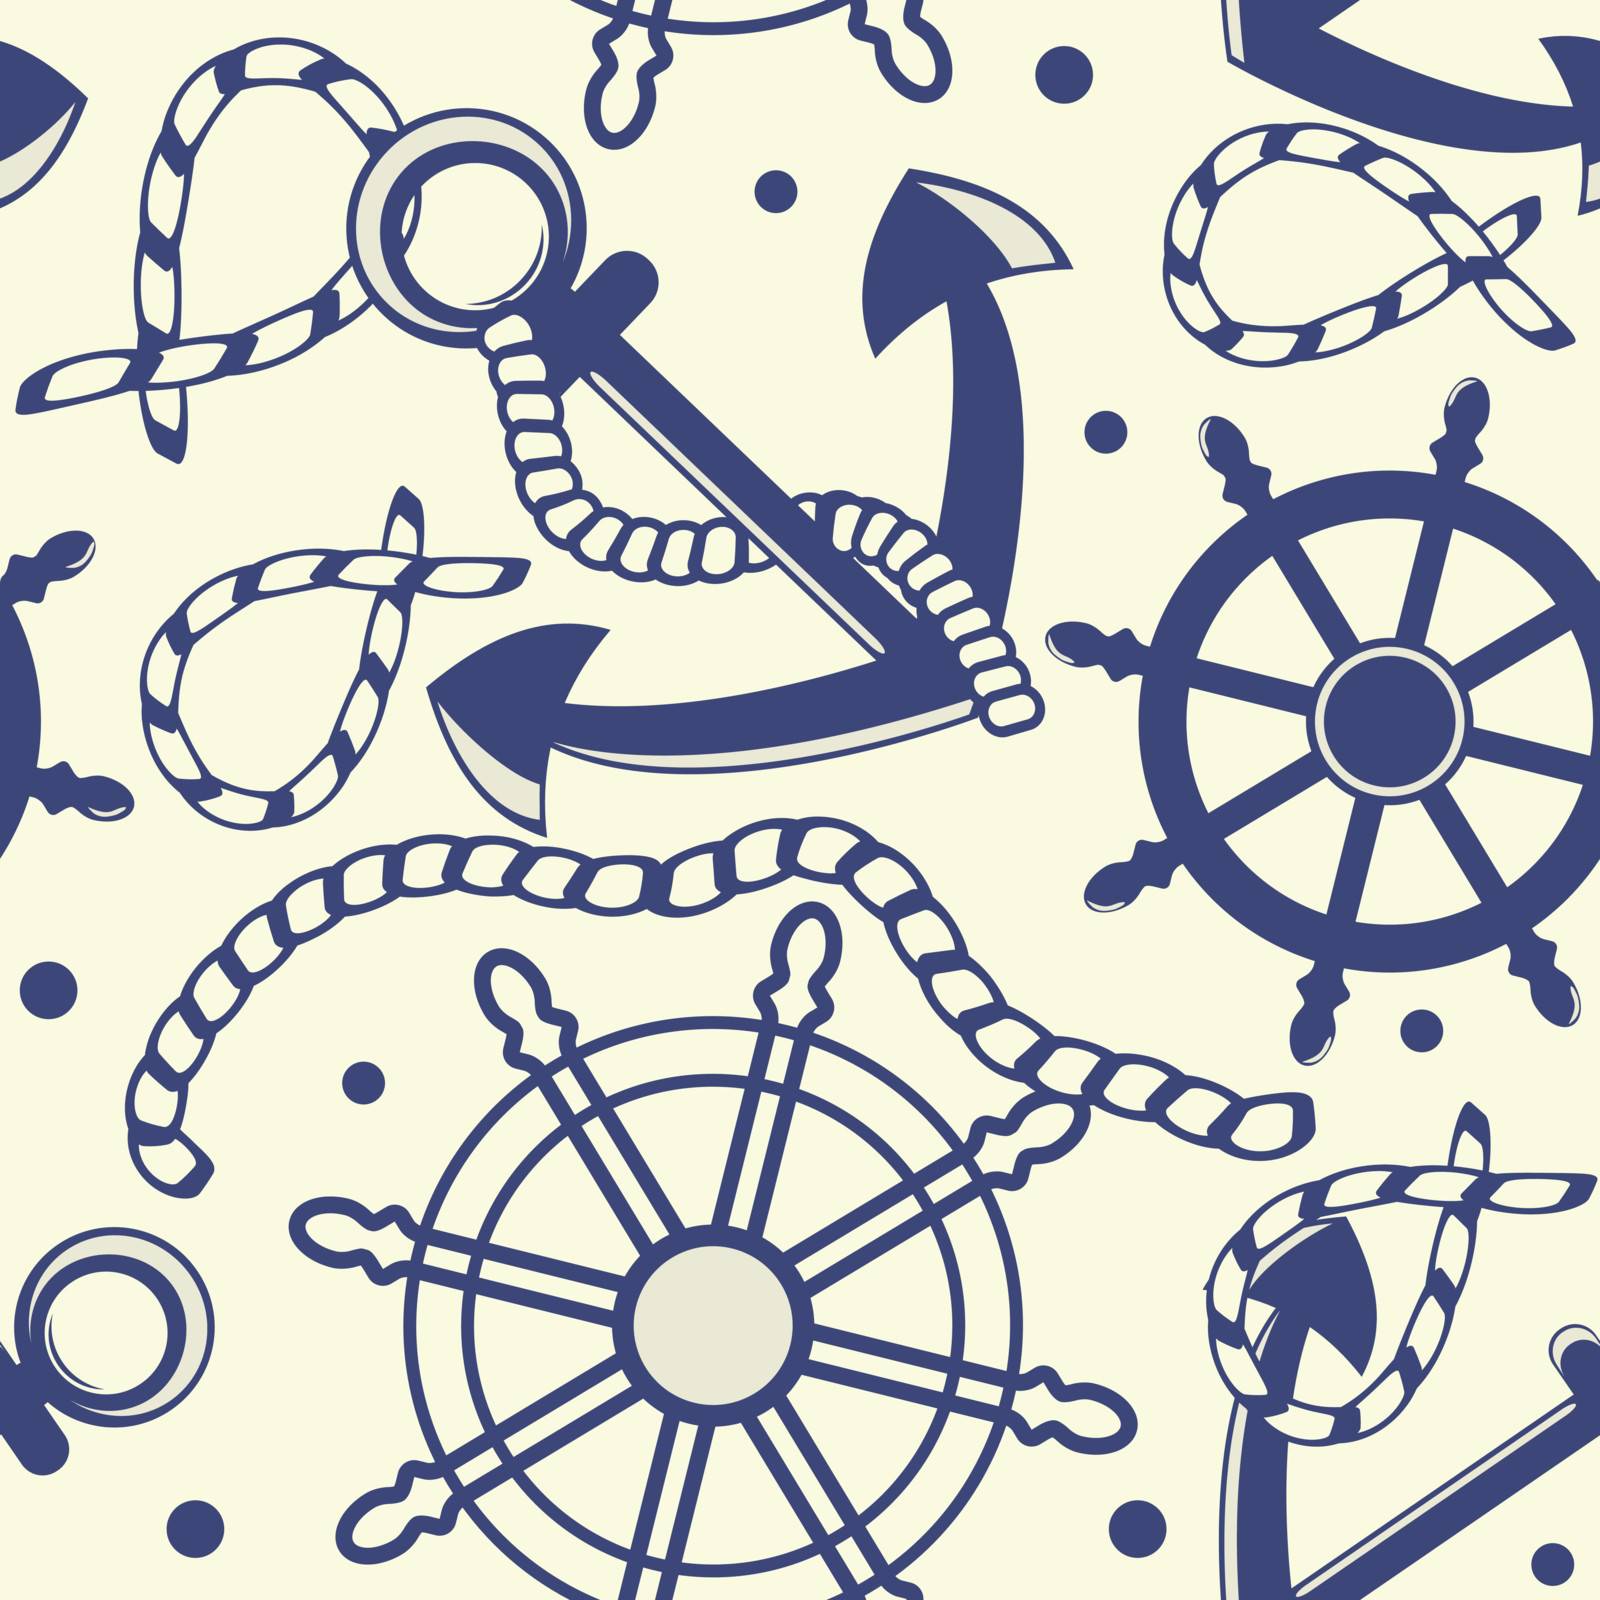 Marine seamless background with anchor, ropes, wheel, marine knots.